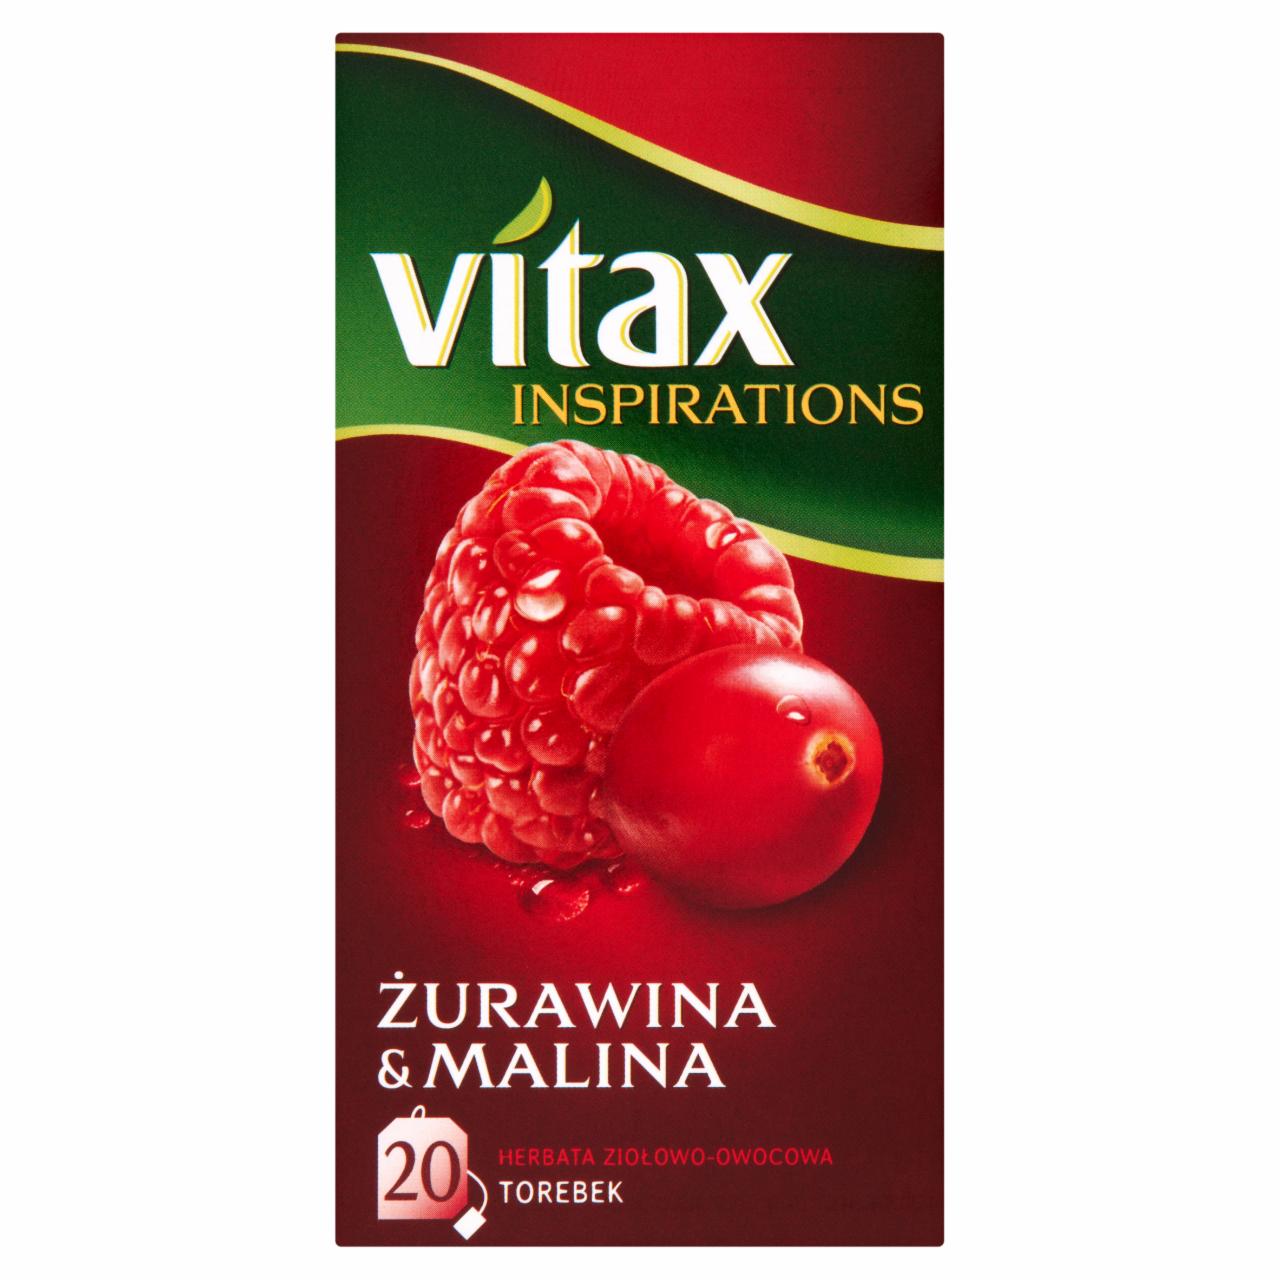 Zdjęcia - Vitax Inspirations Żurawina and Malina Herbata ziołowo-owocowa